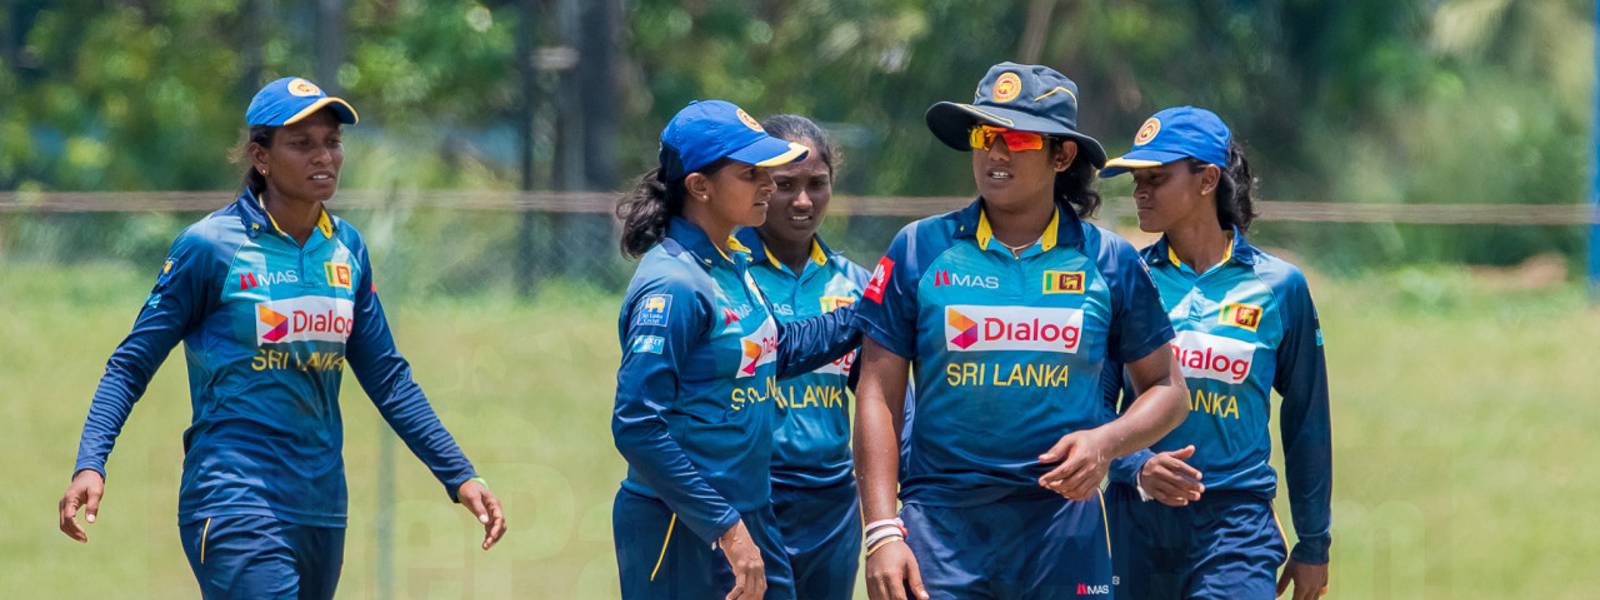 SL vs WI Women’s Cricket WC qualifiers canceled